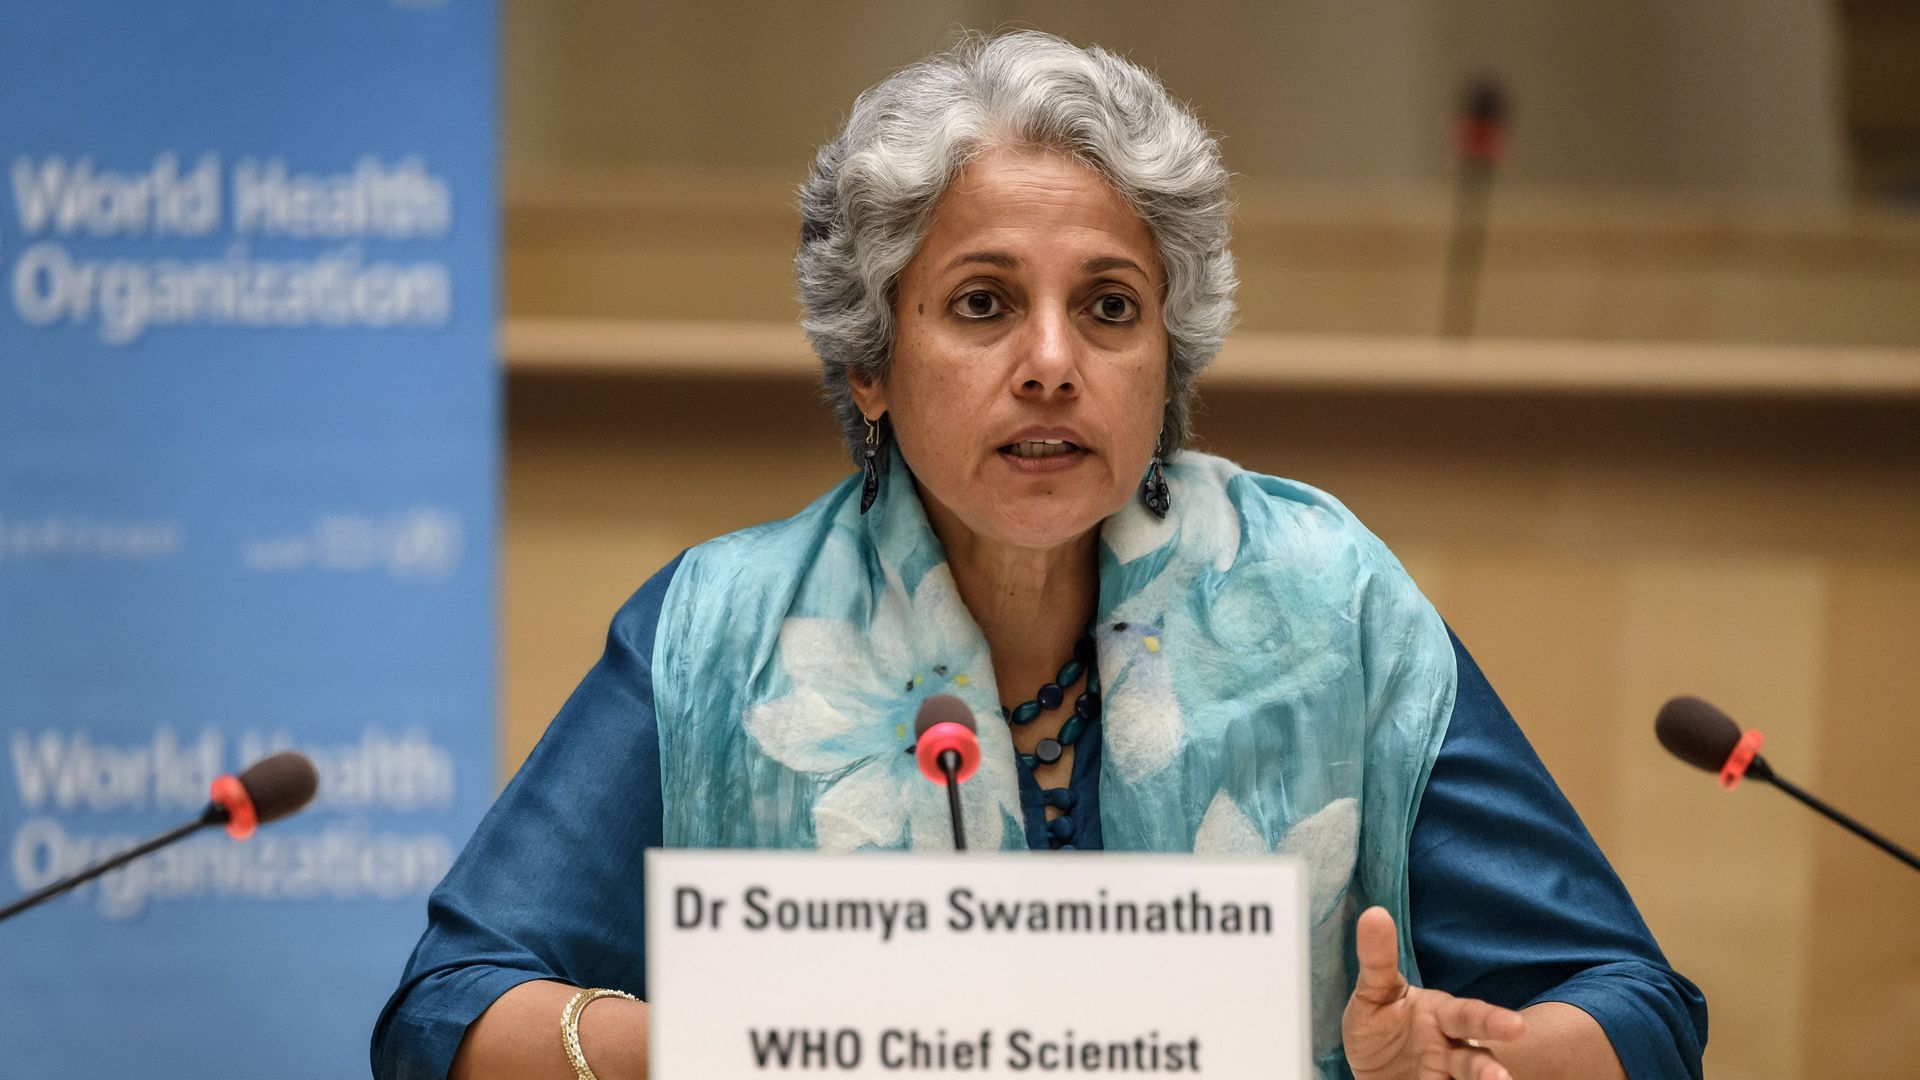 World Health Organization (WHO) Chief Scientist Soumya Swaminathan 